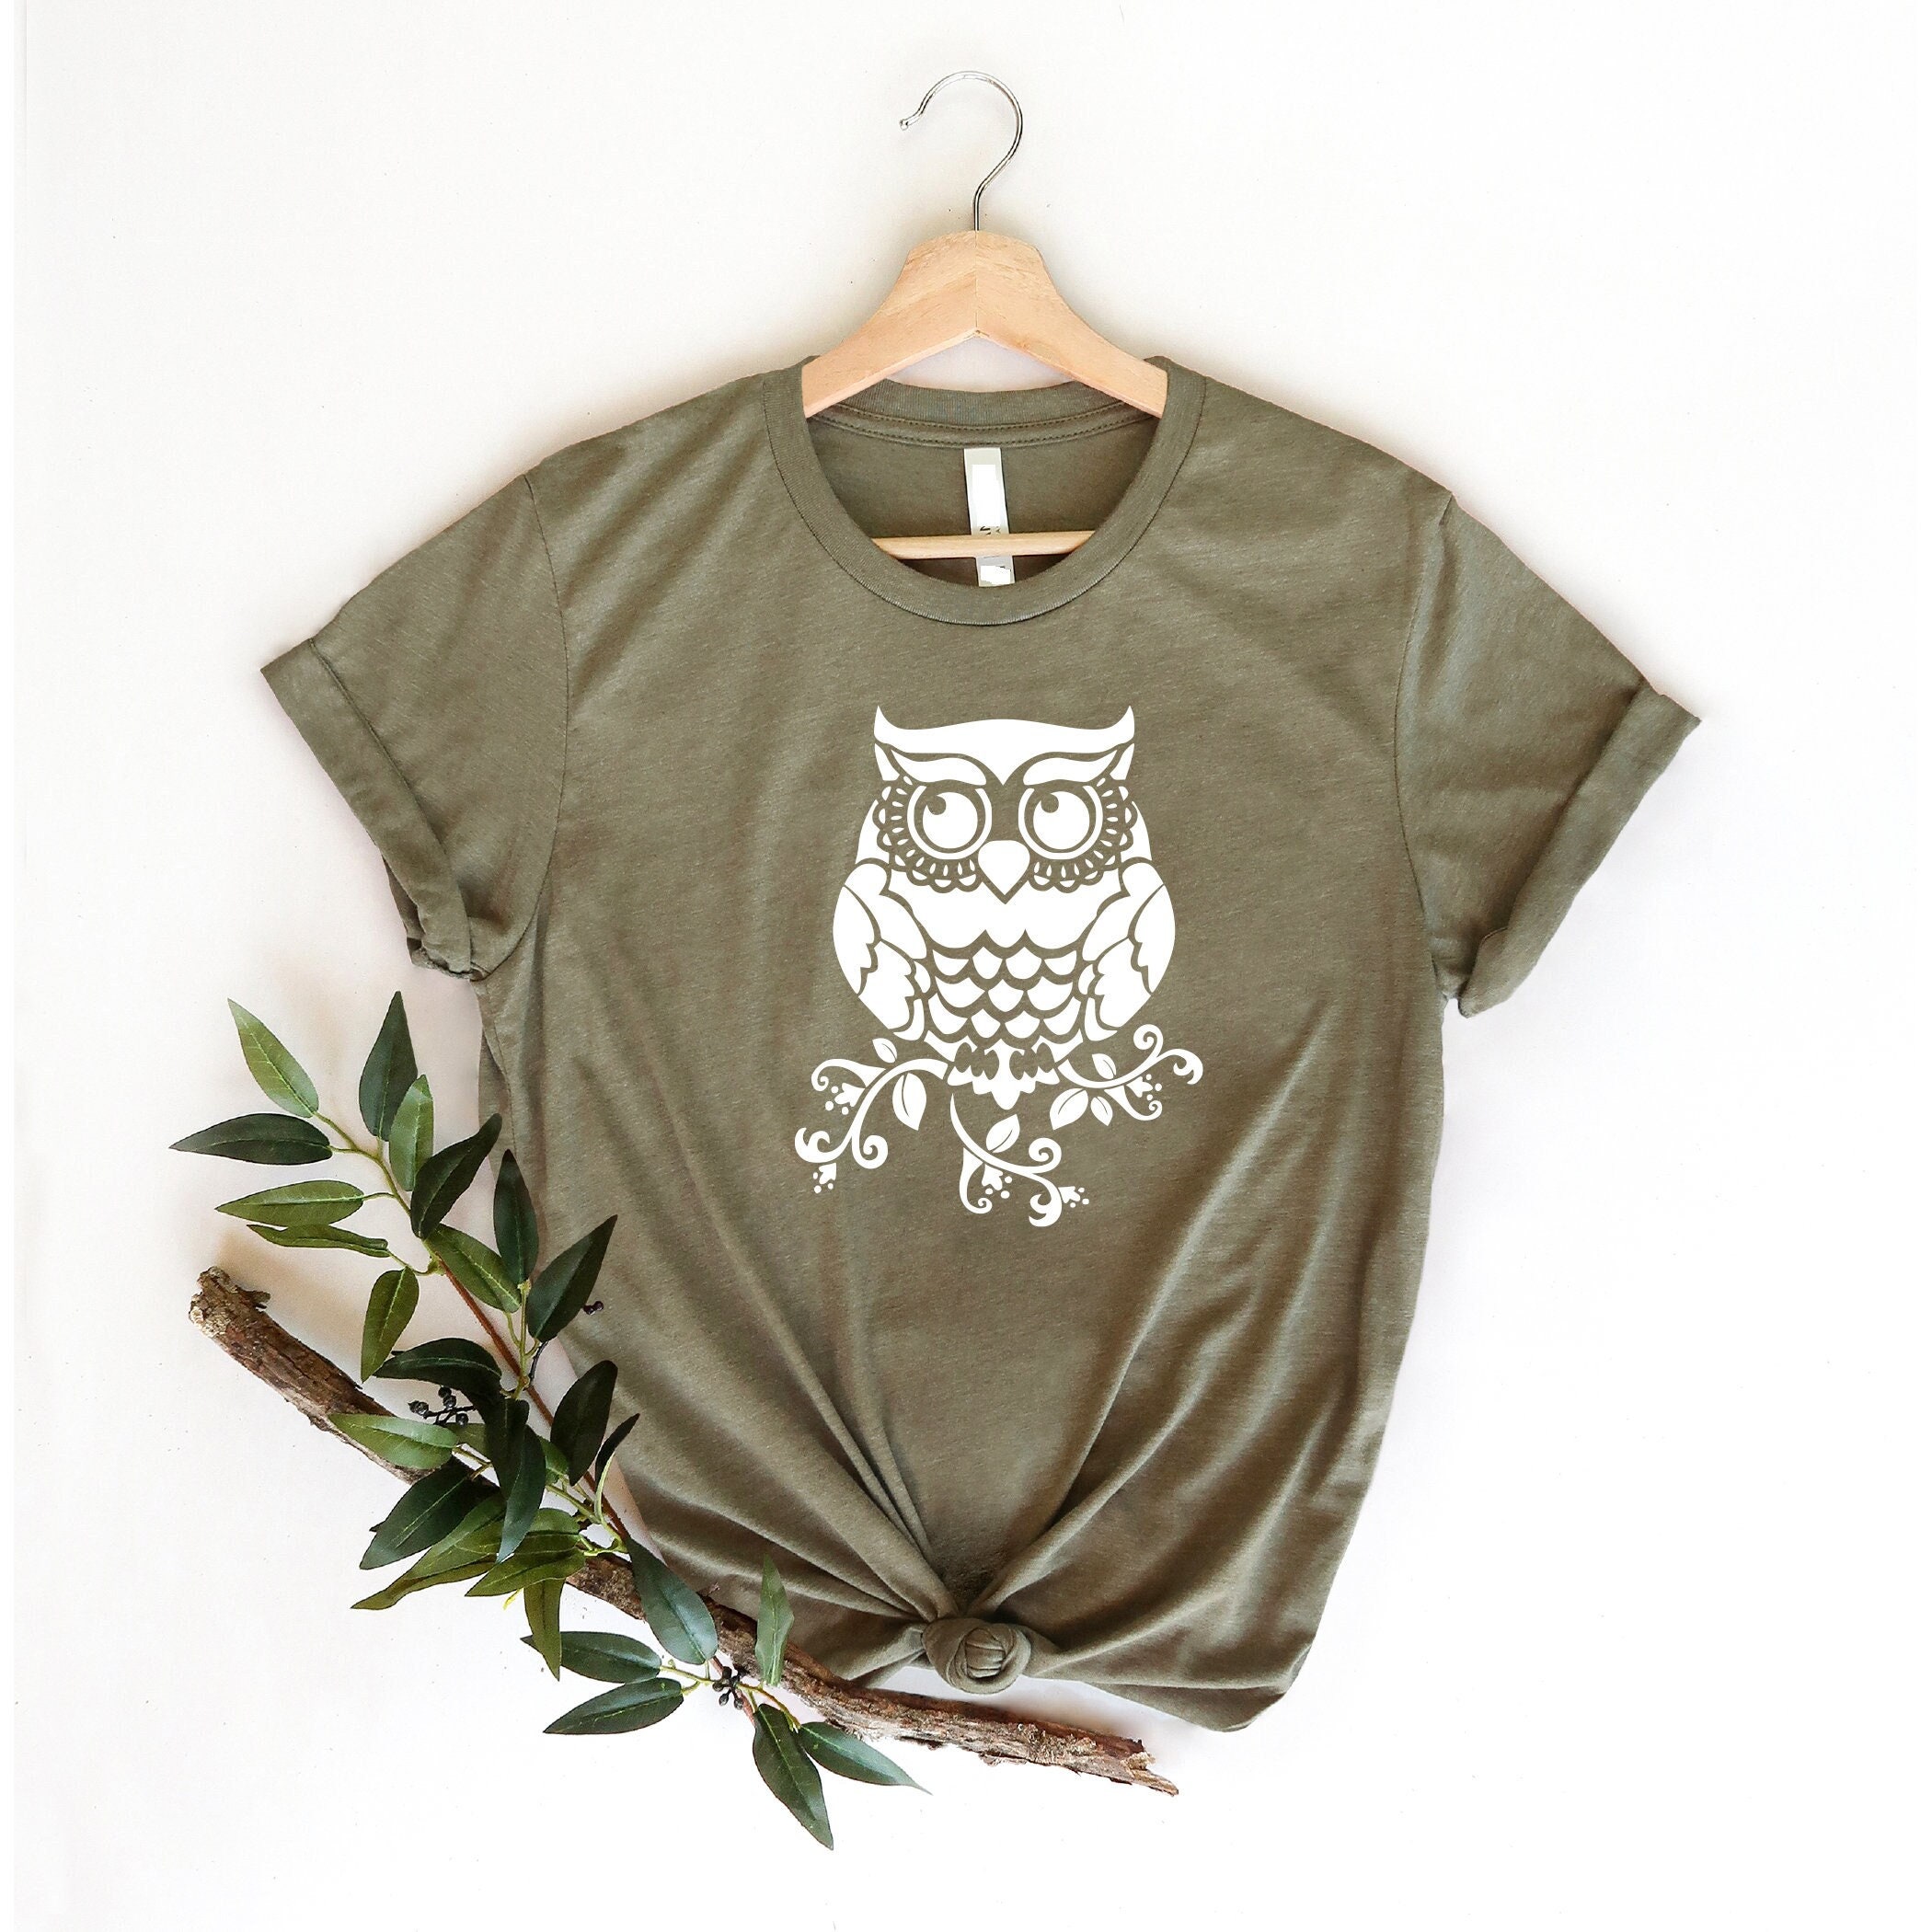 Cute Owl Shirt, Birth T shirt, Cute Animal Shirt, Animal Lover Shirt, Shirts for Women, Gift for Ani